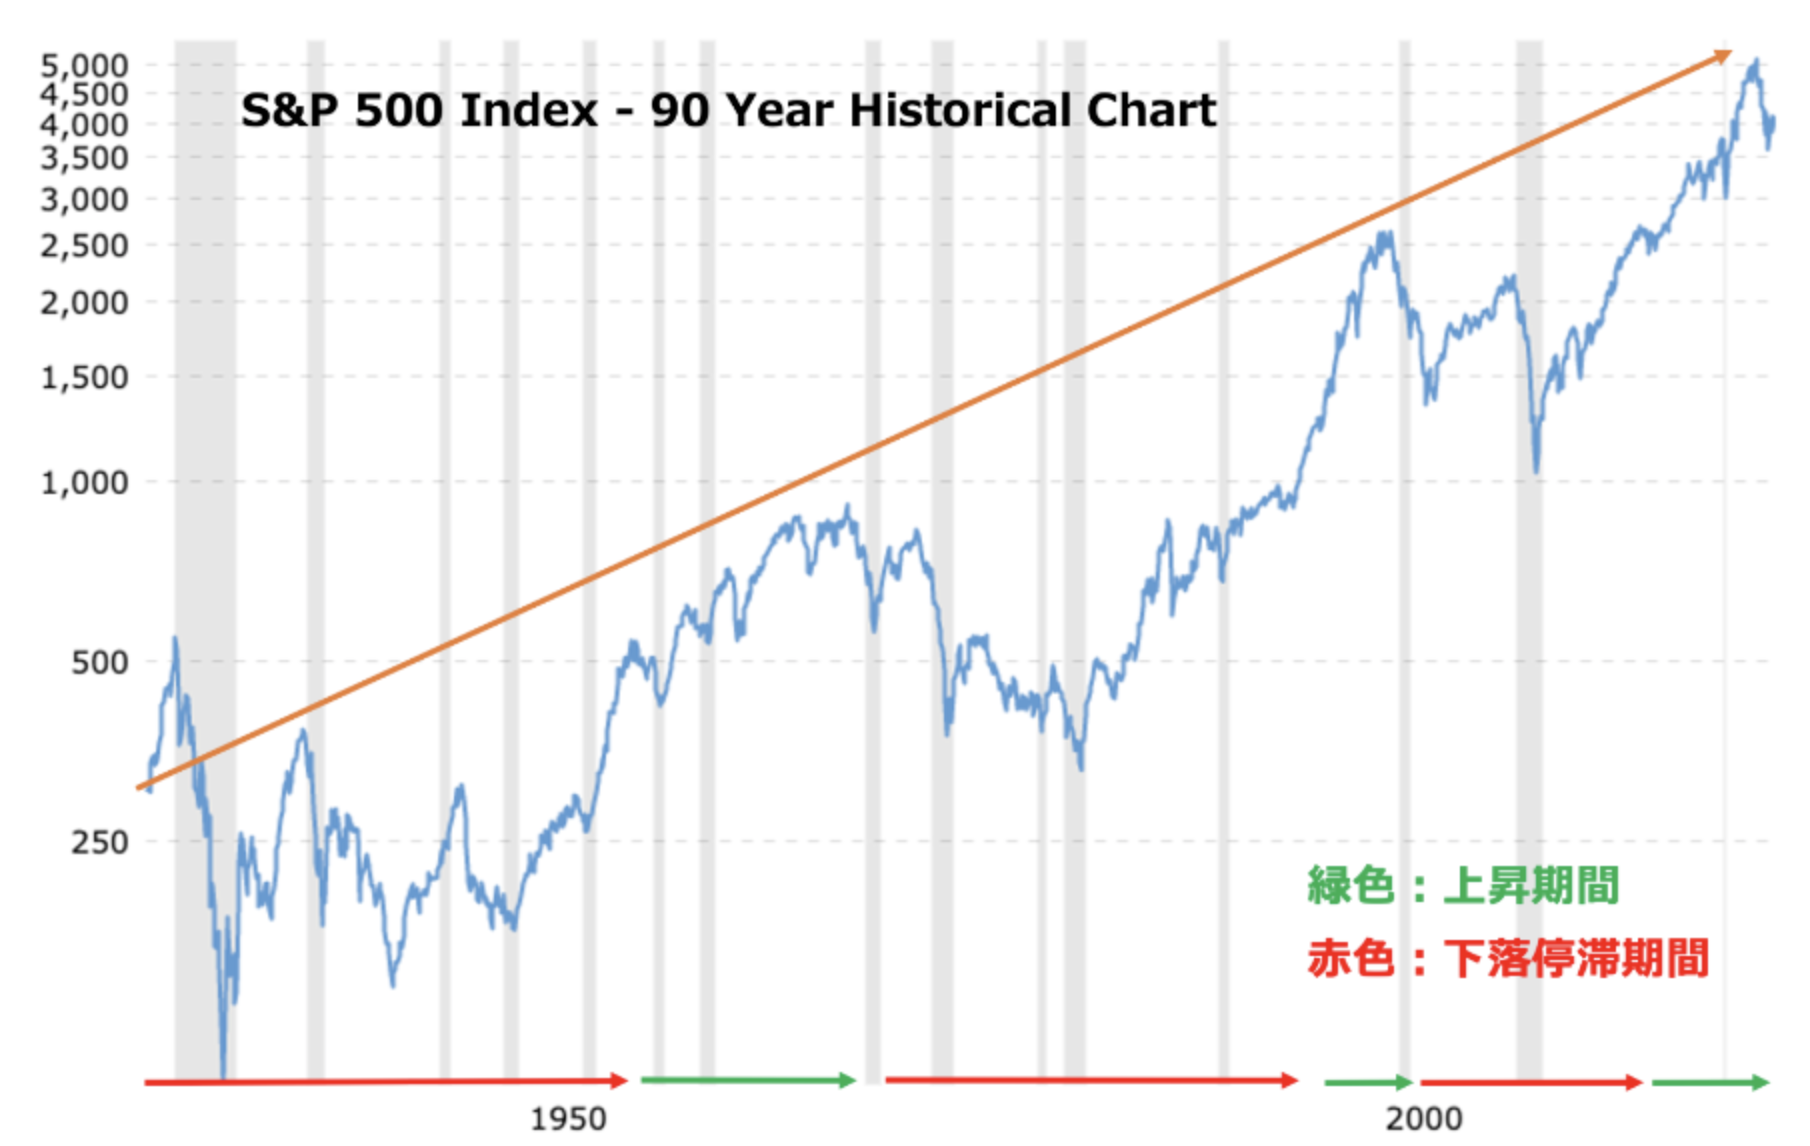 S&P500指数は停滞と上昇期間を繰り返しながら上昇している